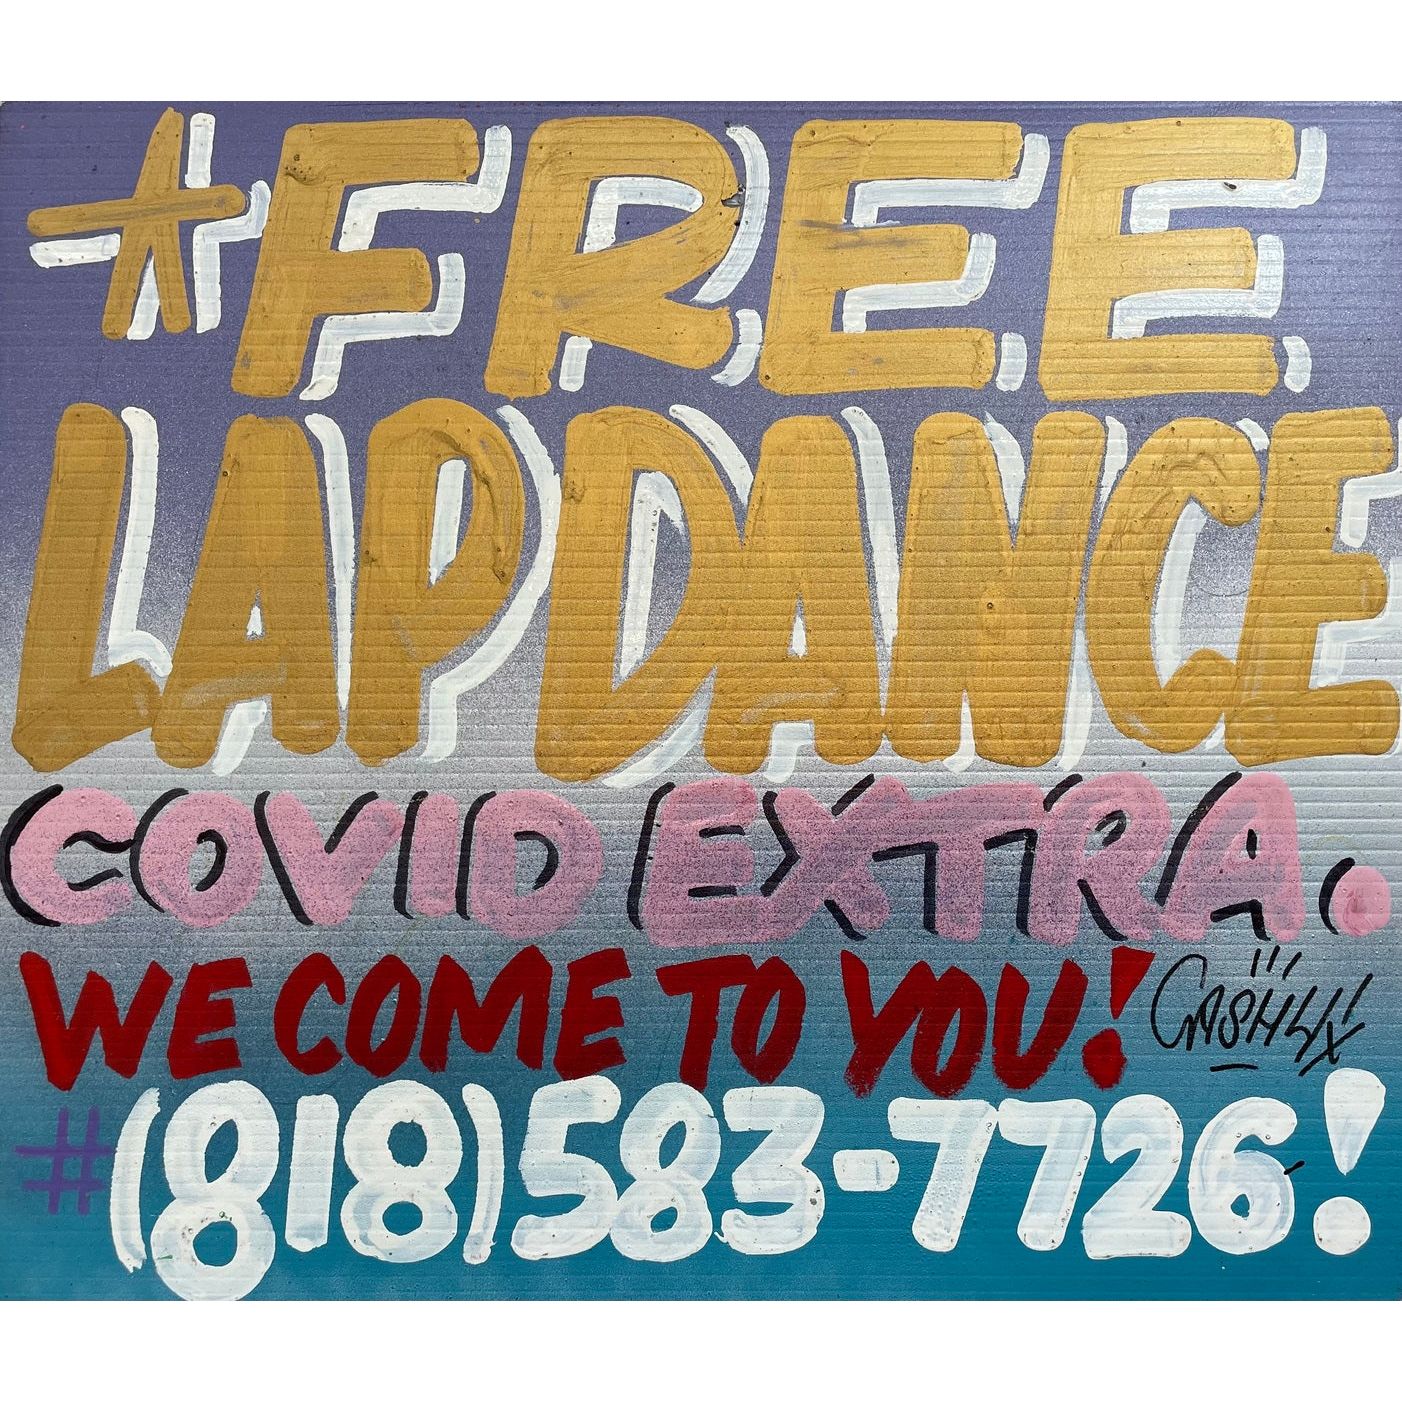 Free Lap Dance